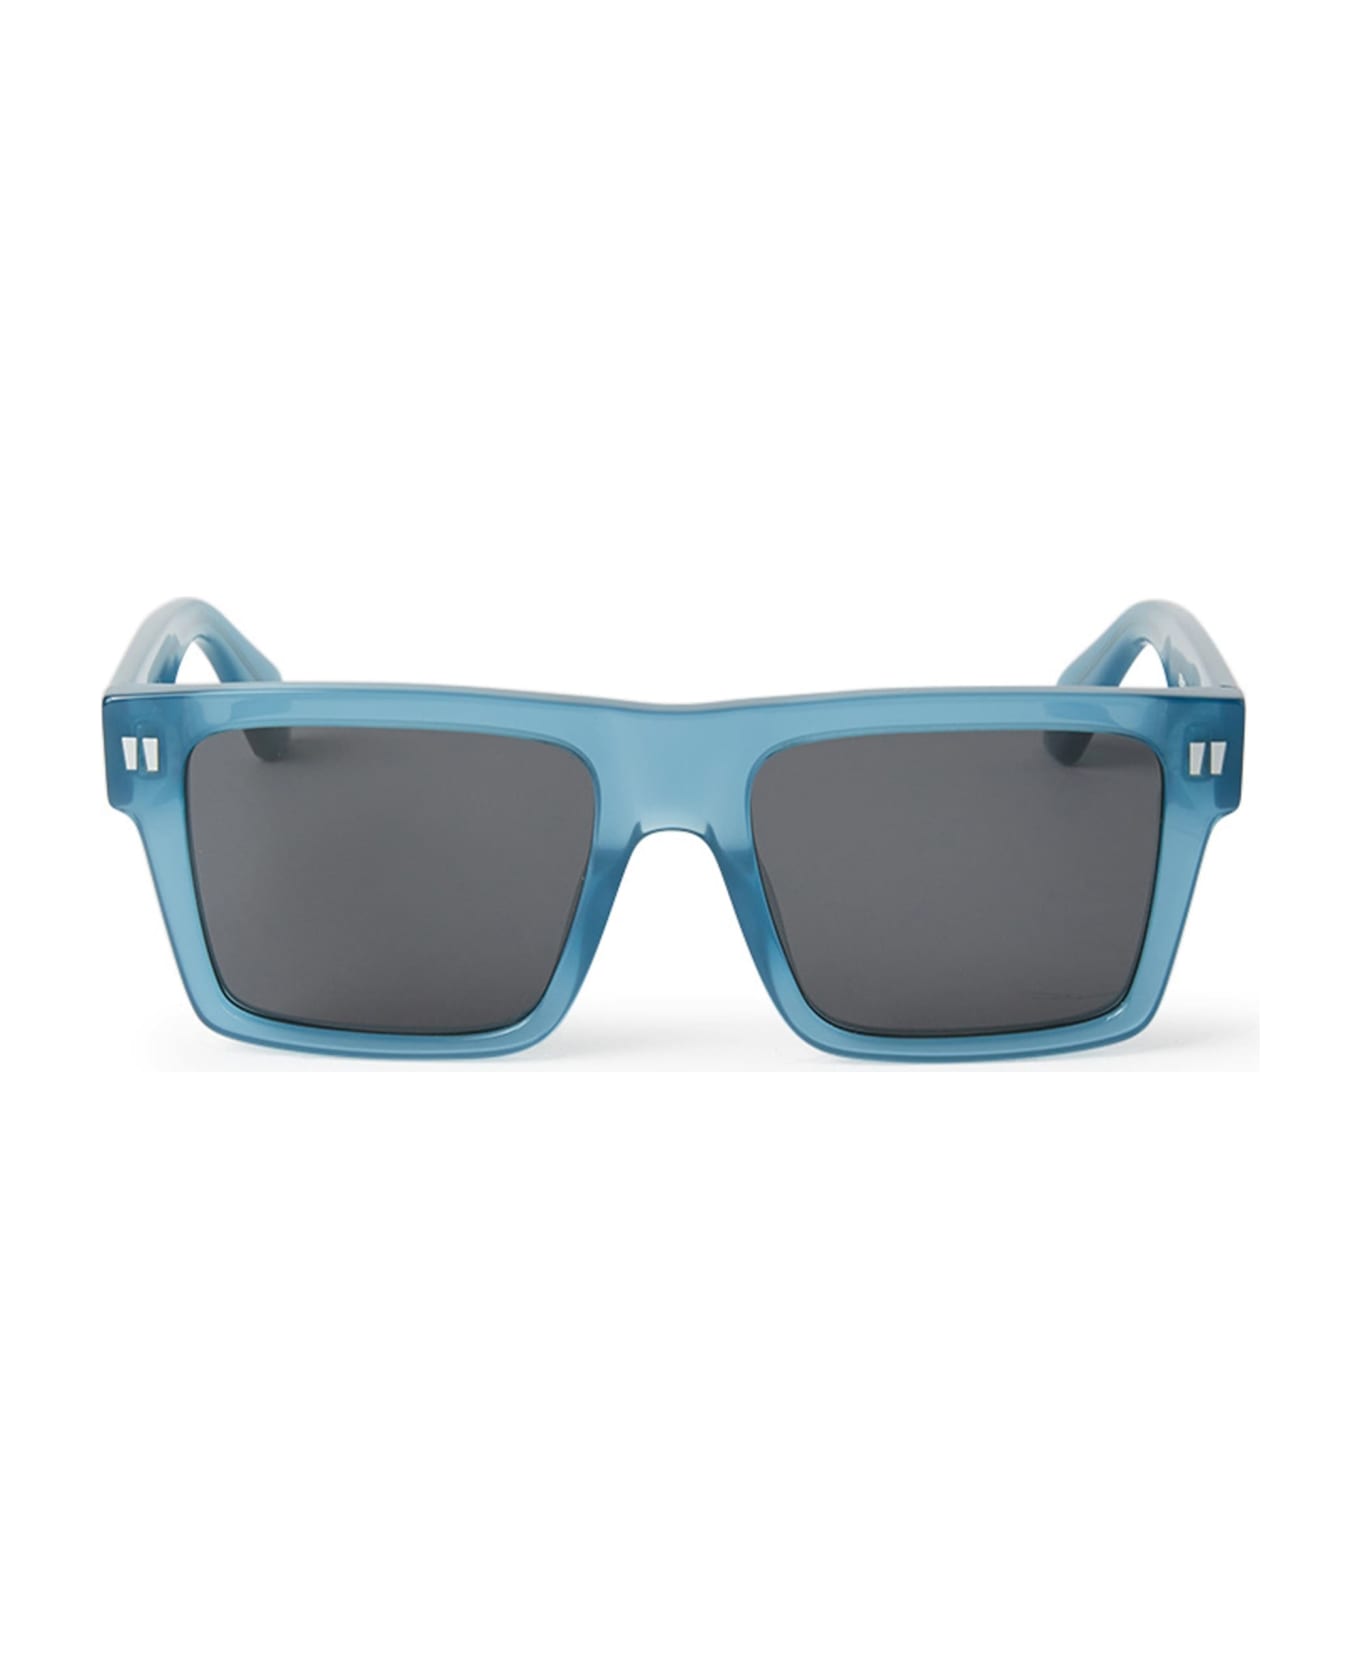 Off-White Lawton - Blue / Dark Grey Sunglasses - blue